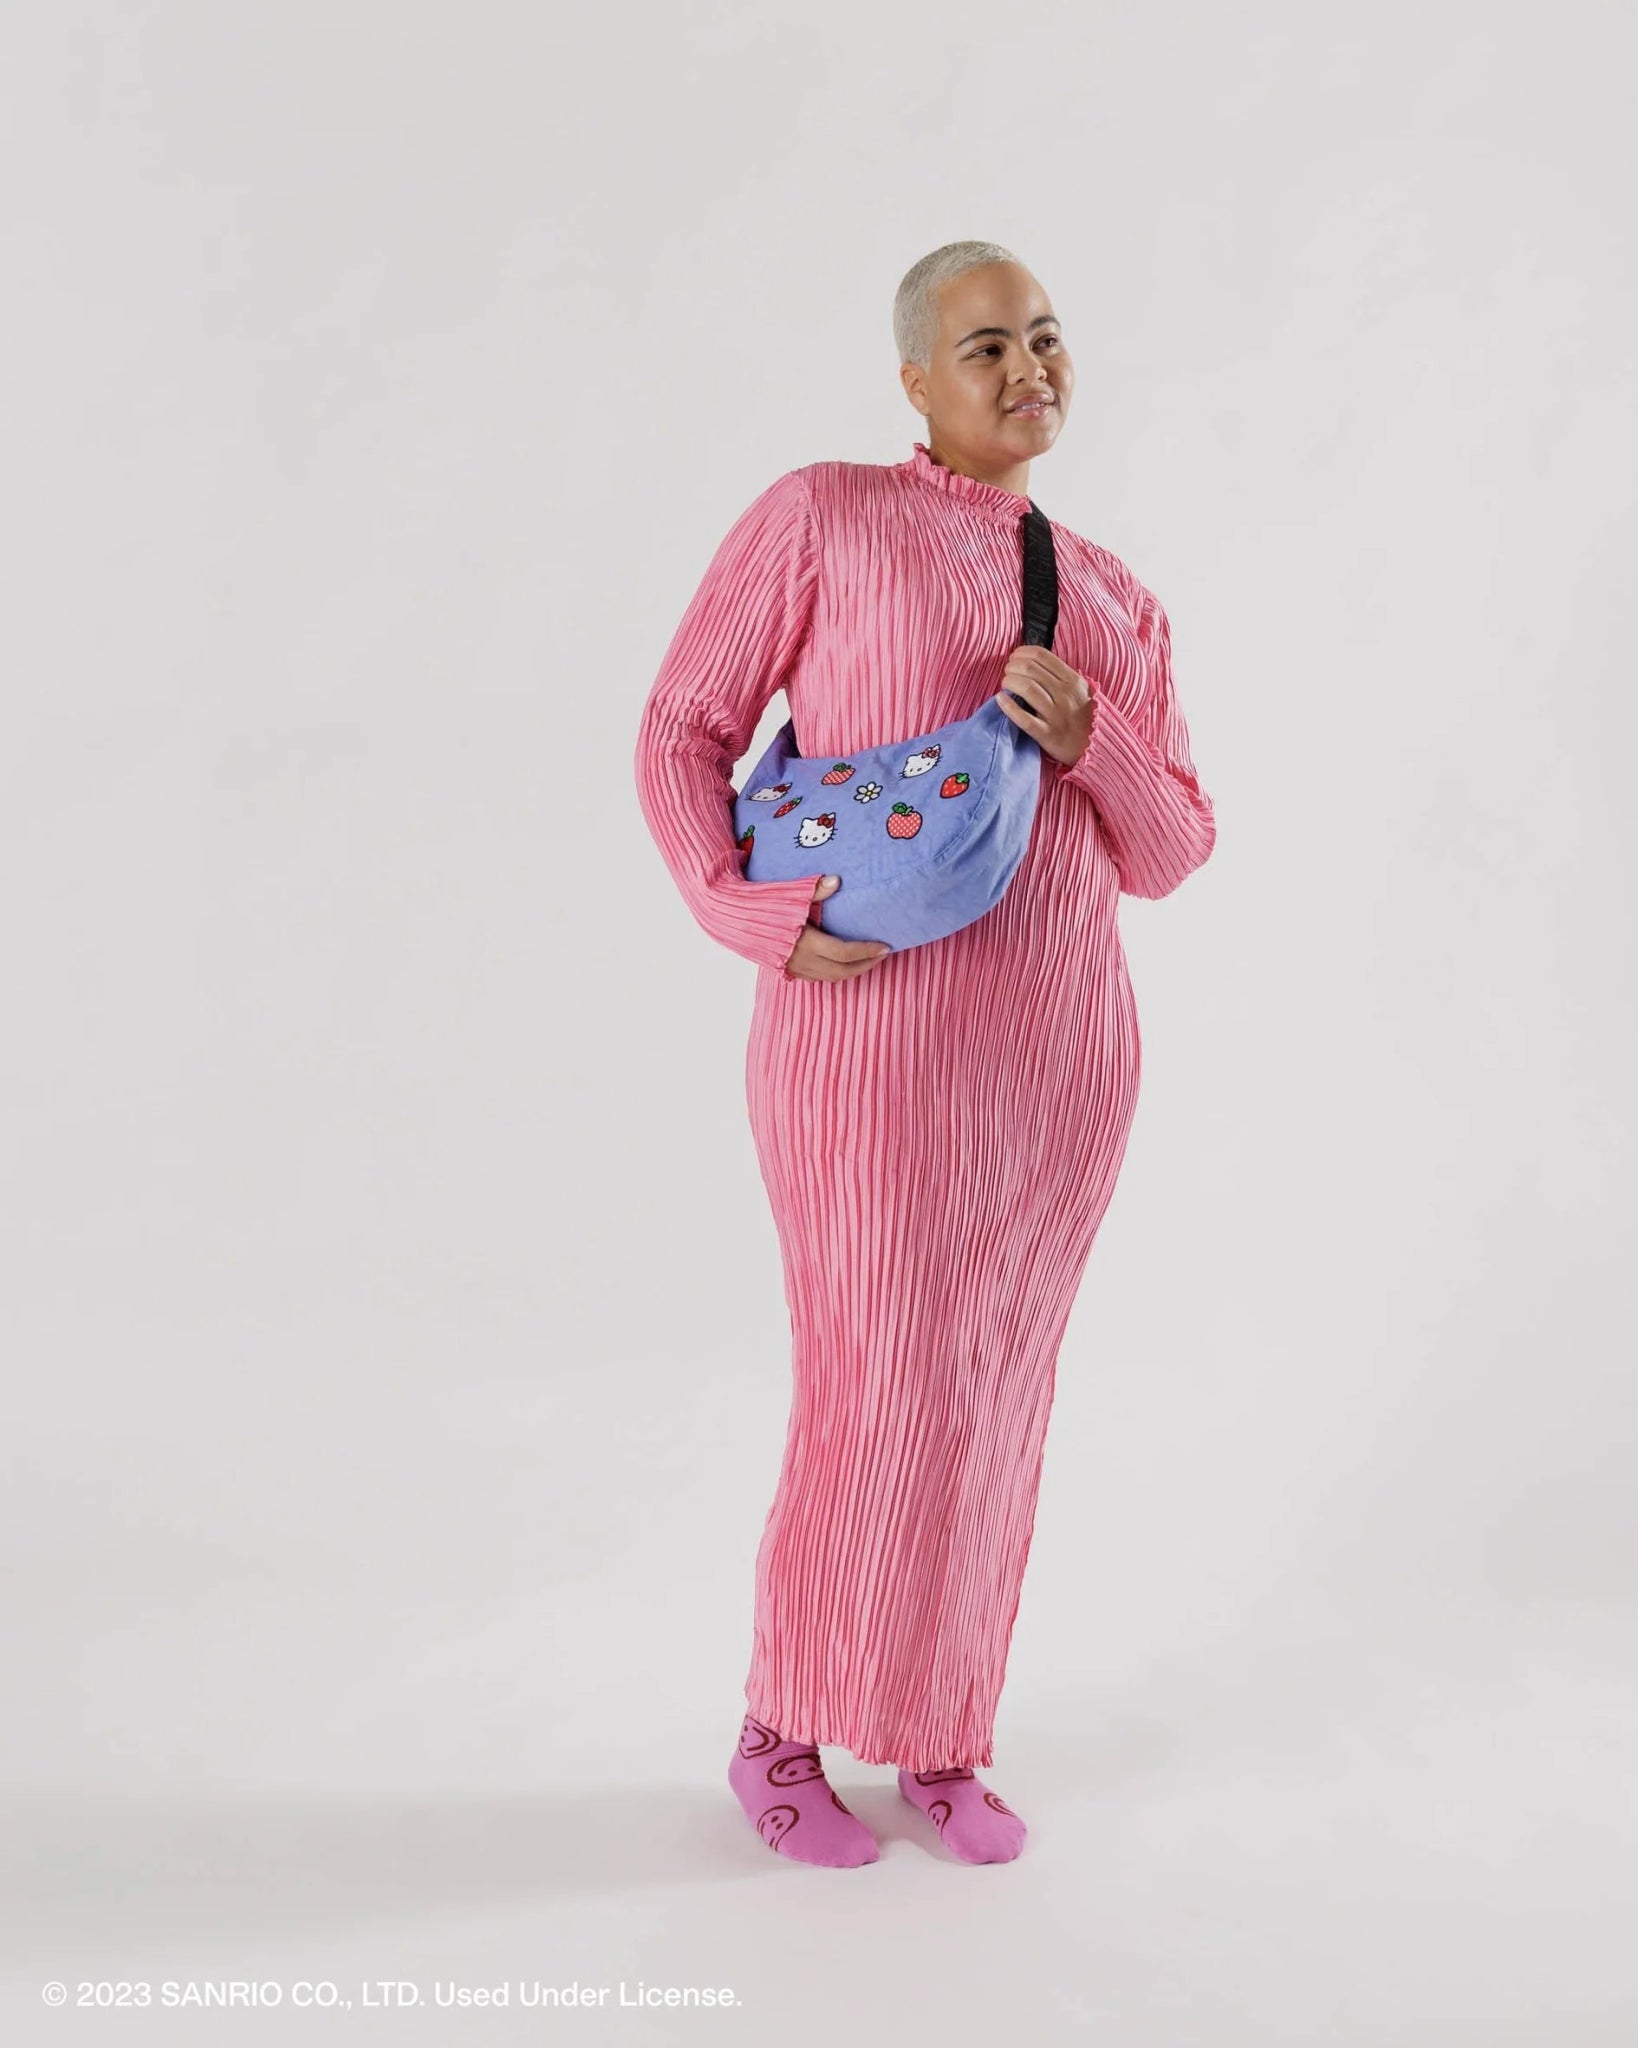 BAGGU Medium Nylon Crescent Bag - Embroidered Hello Kitty - Preston Apothecary